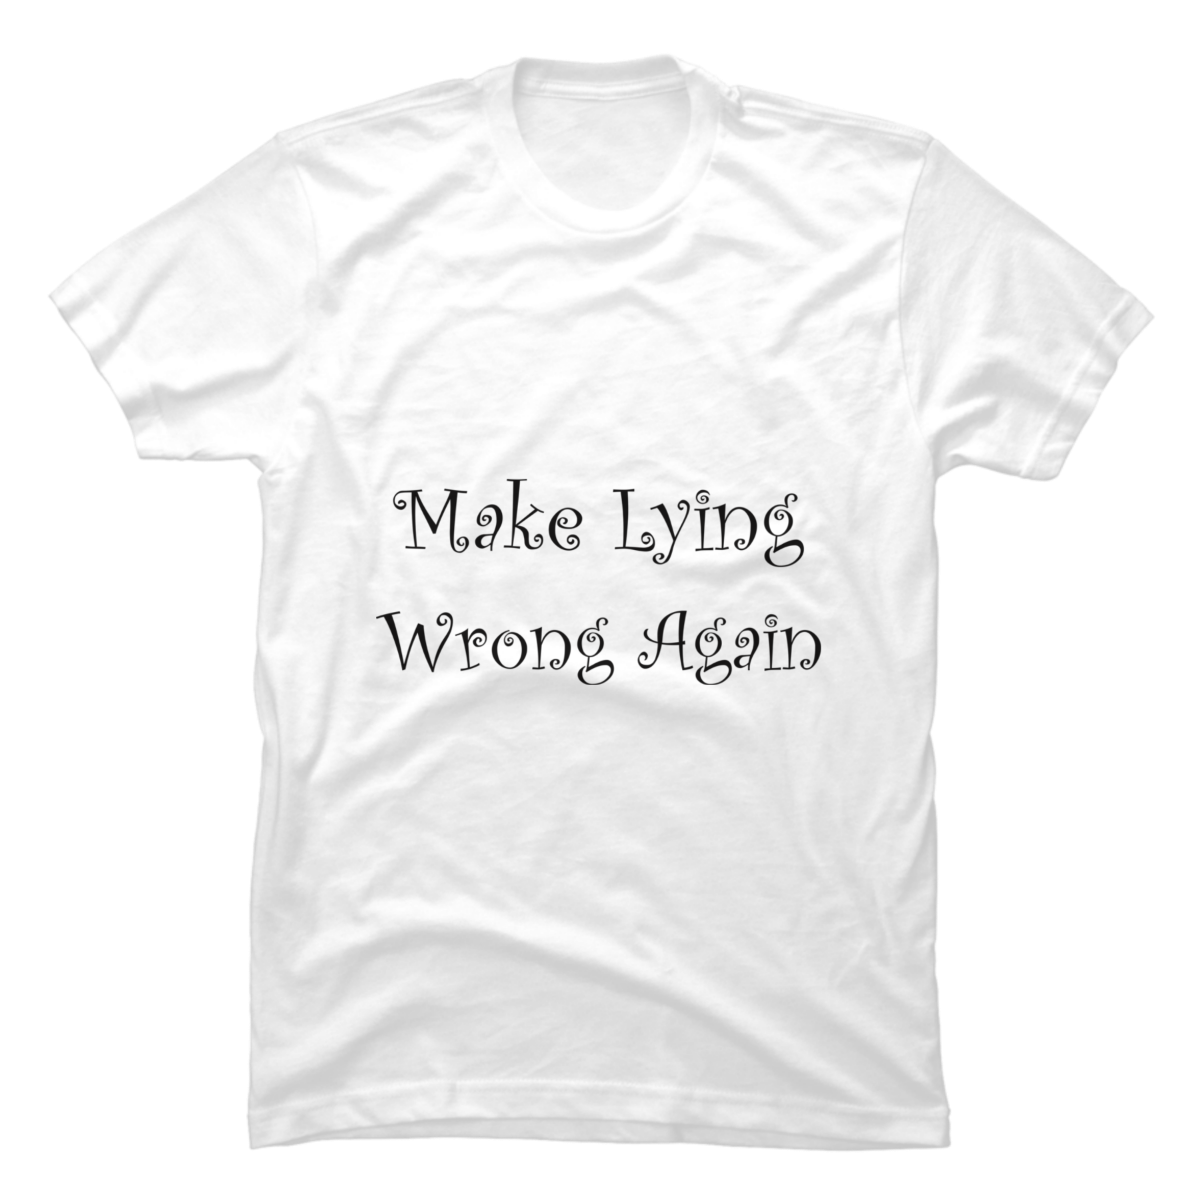 make lying wrong again shirt